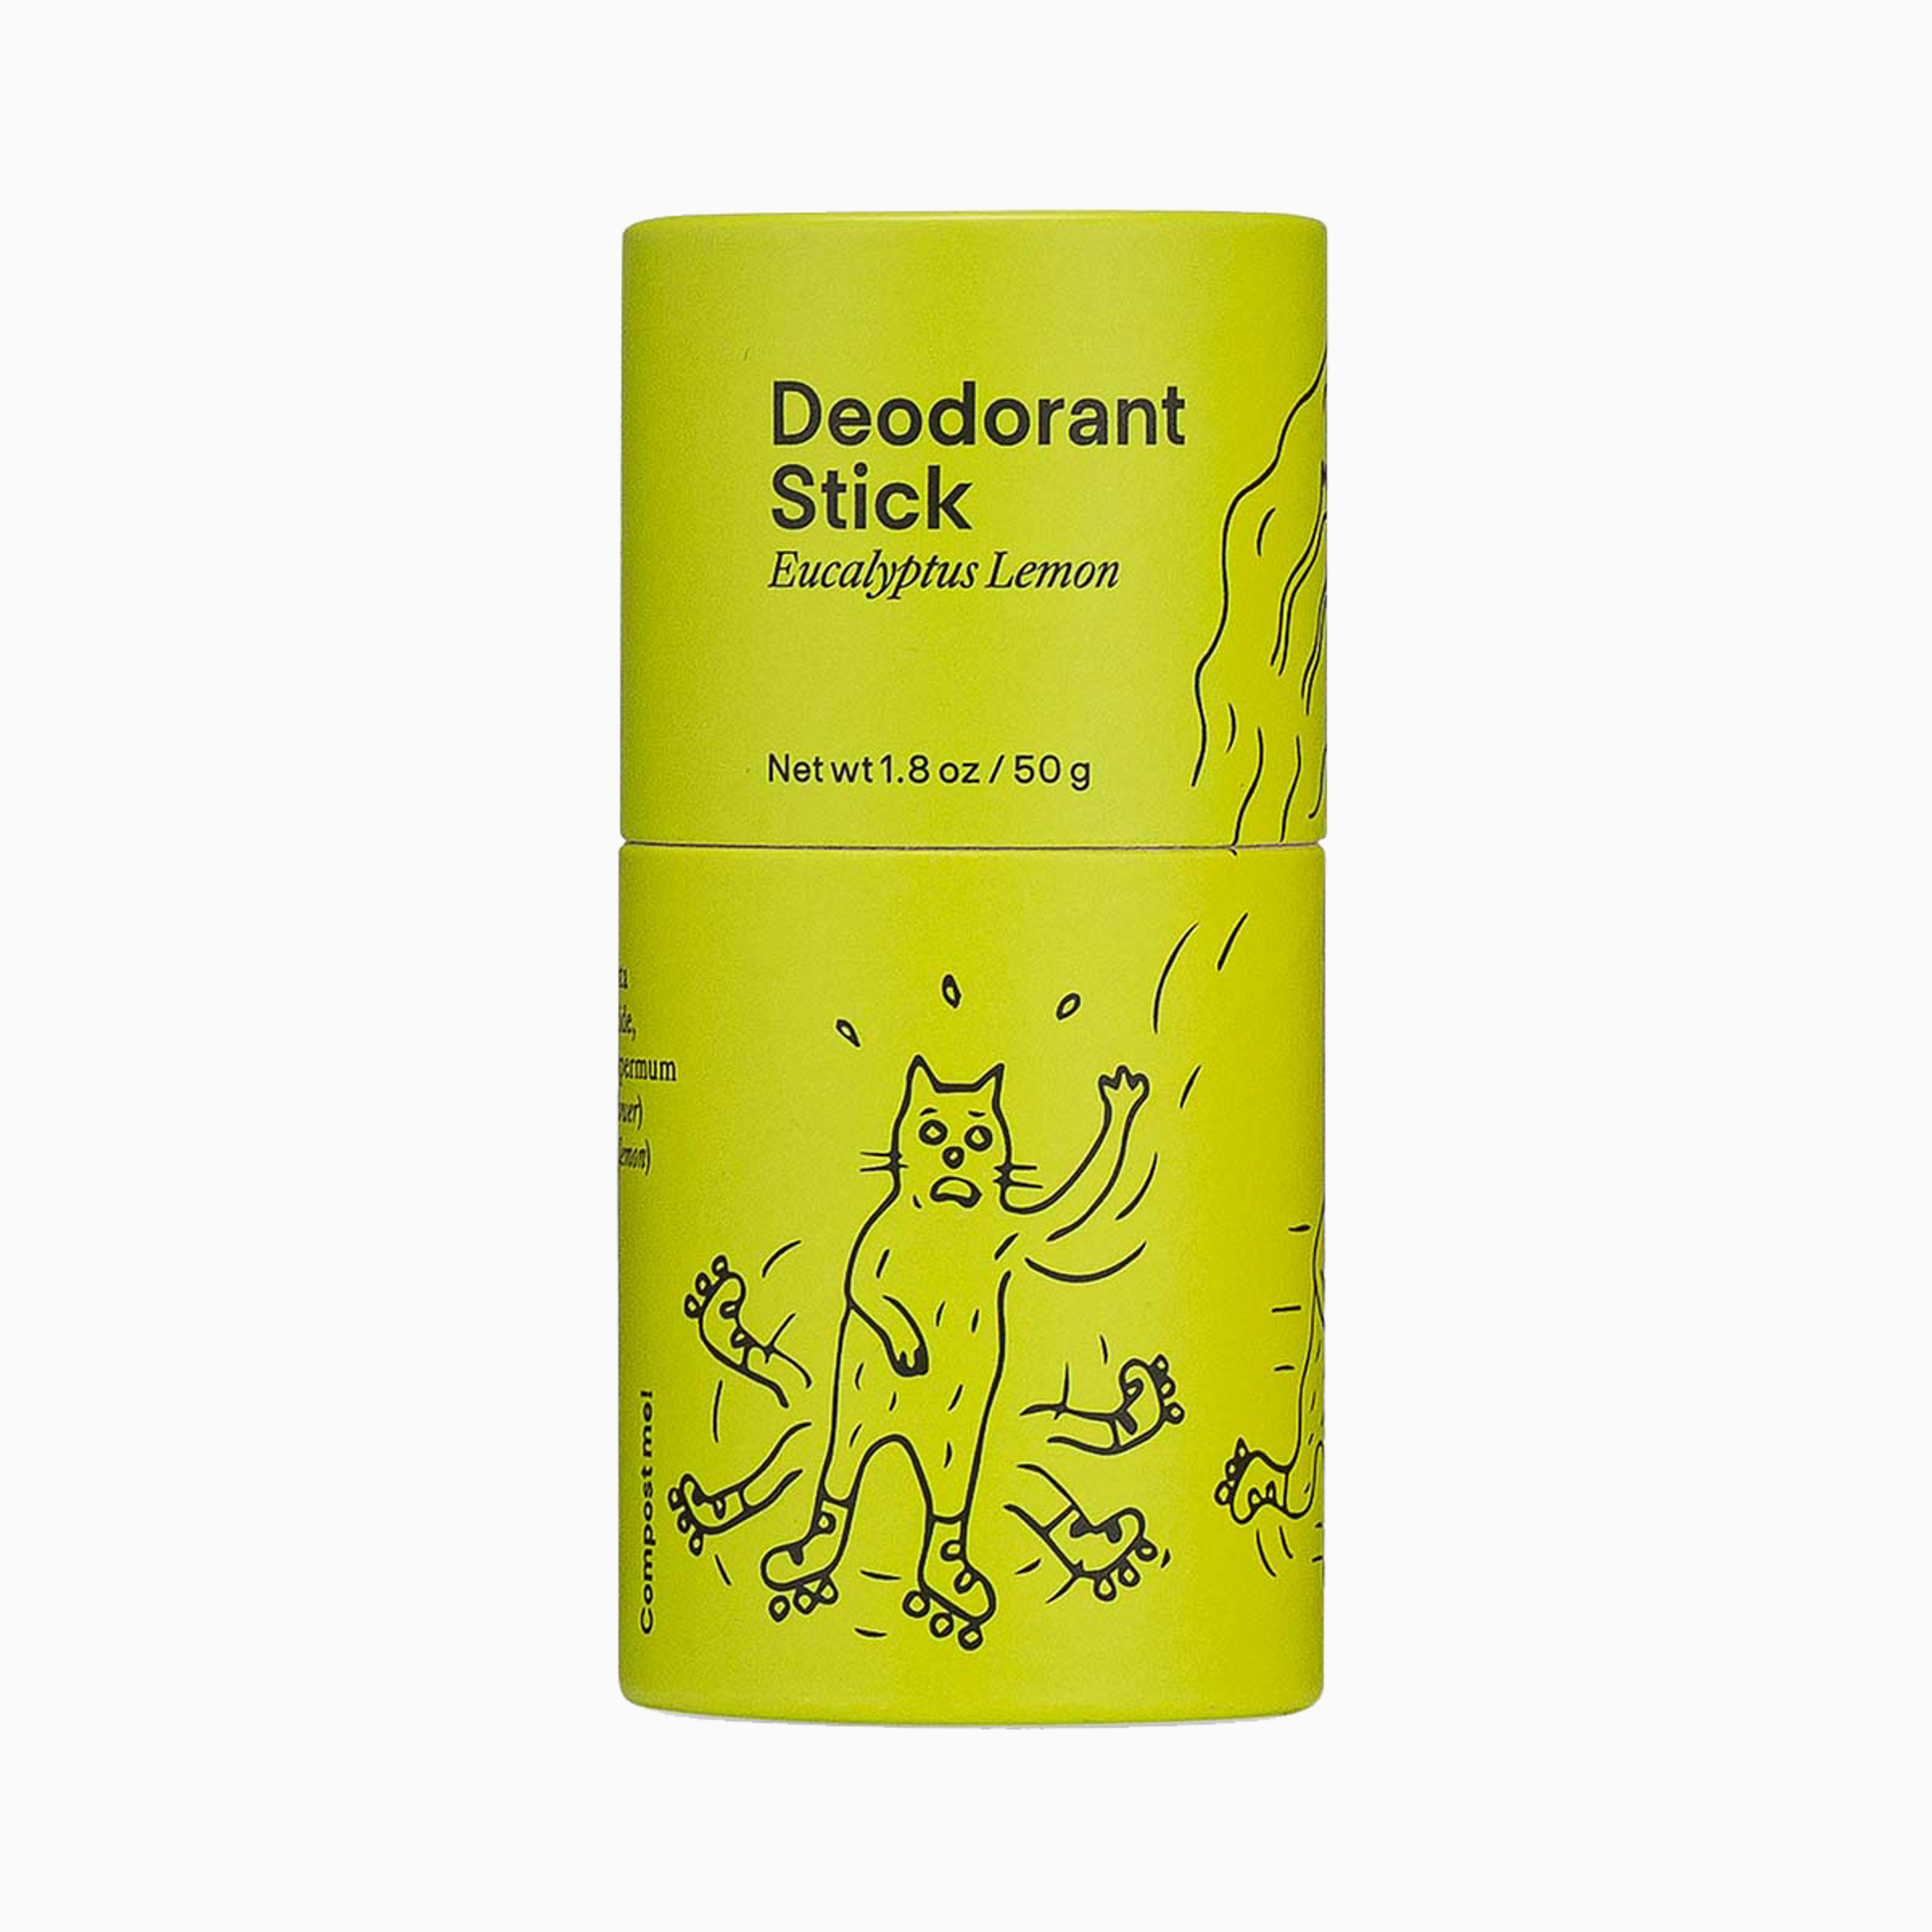 Deodorant Stick - Eucalyptus Lemon